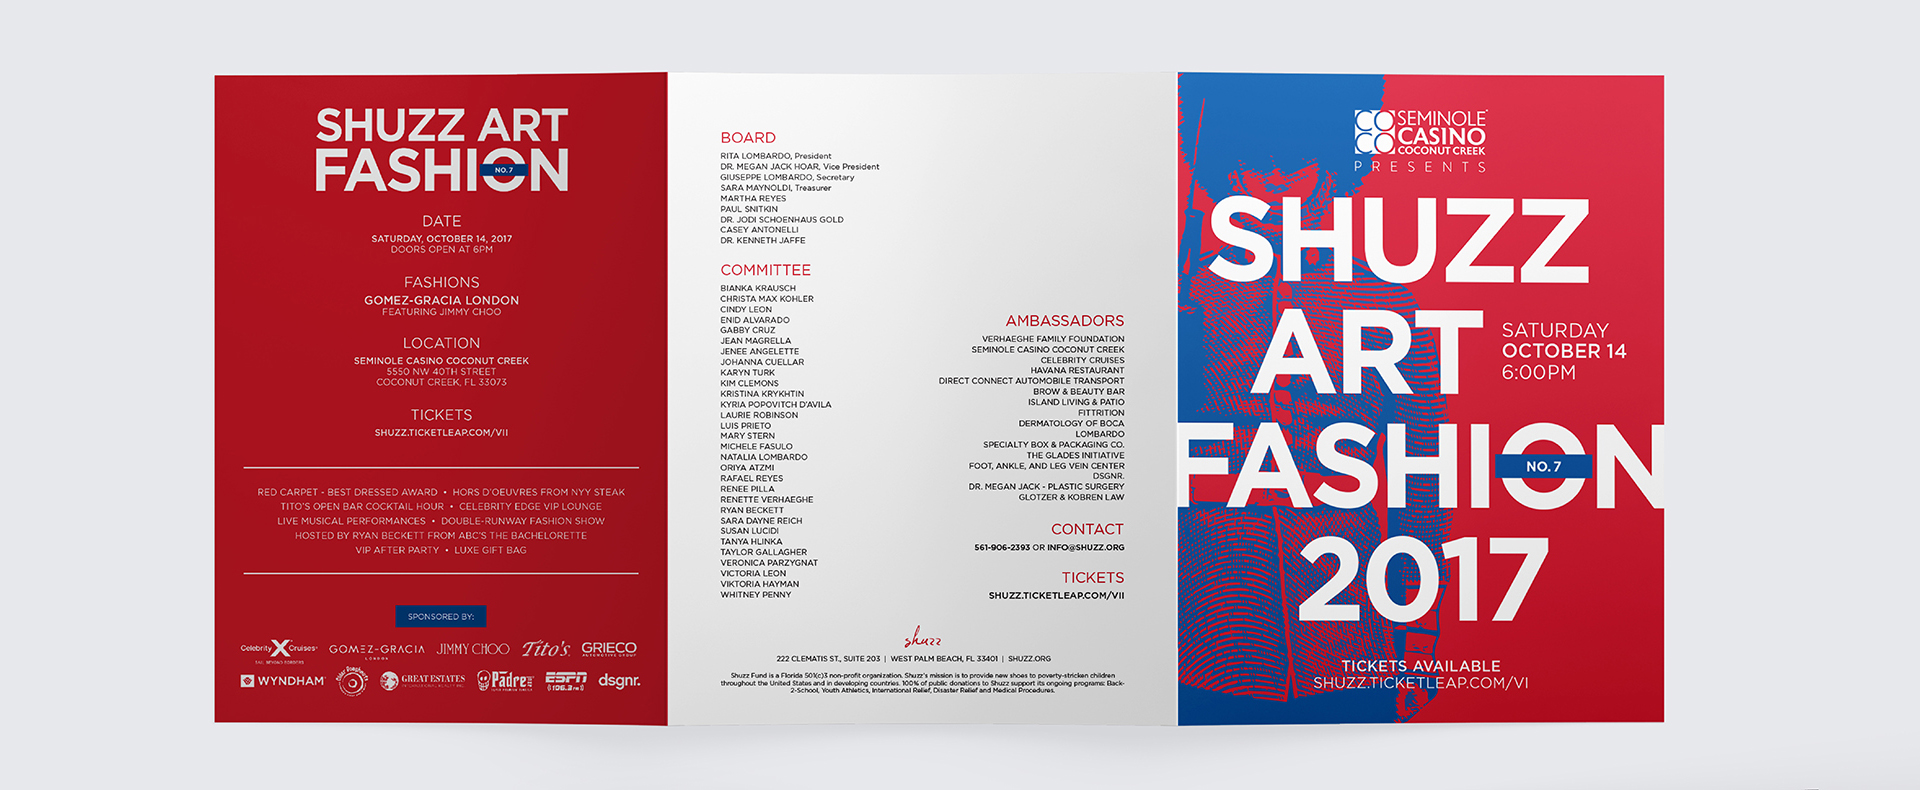 Shuzz the best Fashion marketing advertising branding agency Lombardo